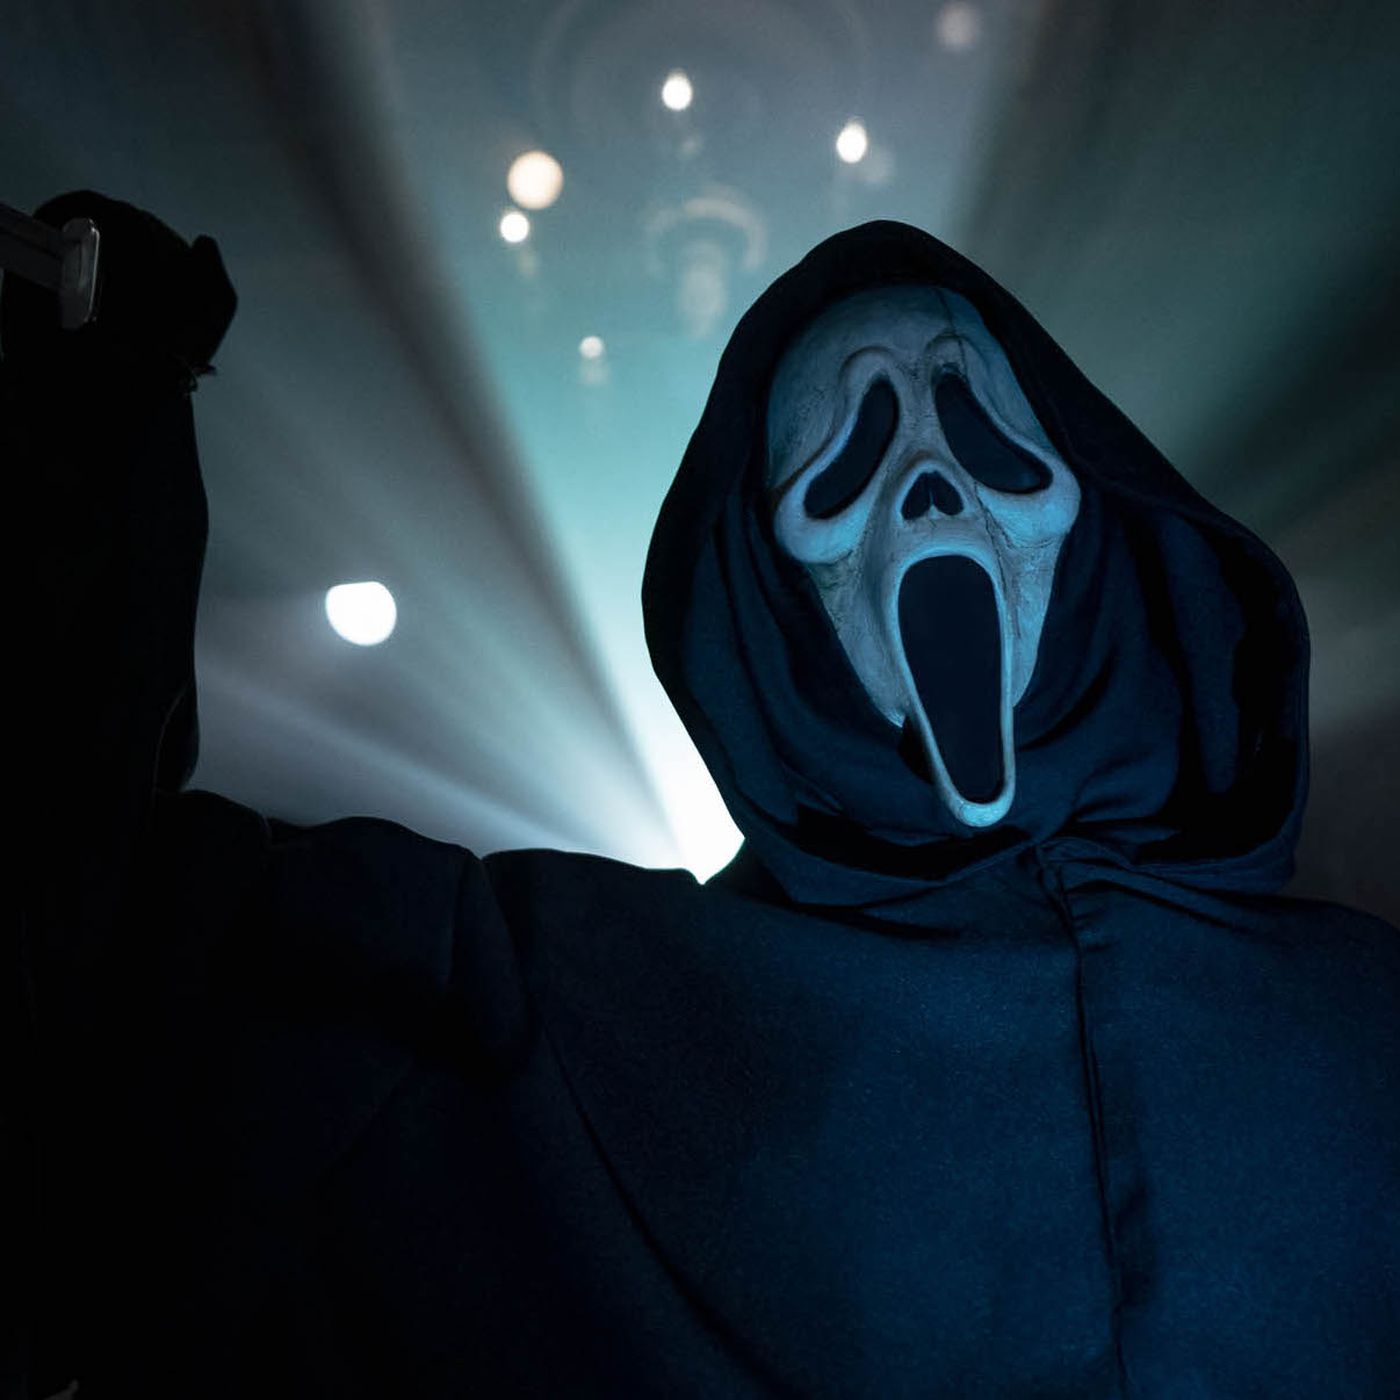 Ghostface slices his way through survivors in Scream VI's official trailer